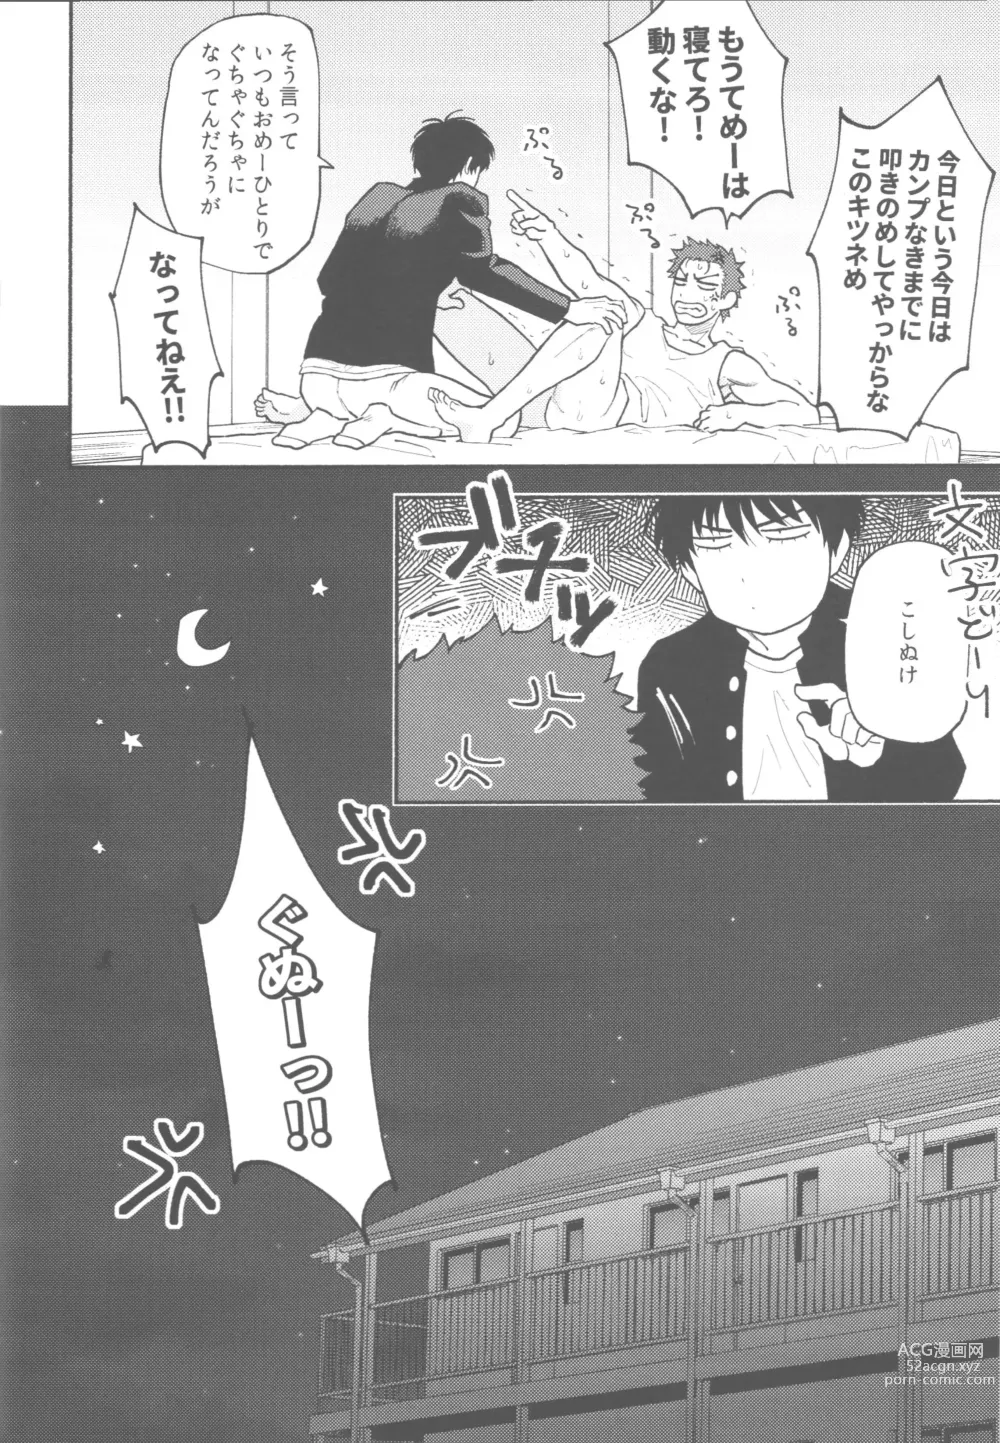 Page 37 of doujinshi BATTLE!BATTLE!BATTLE!